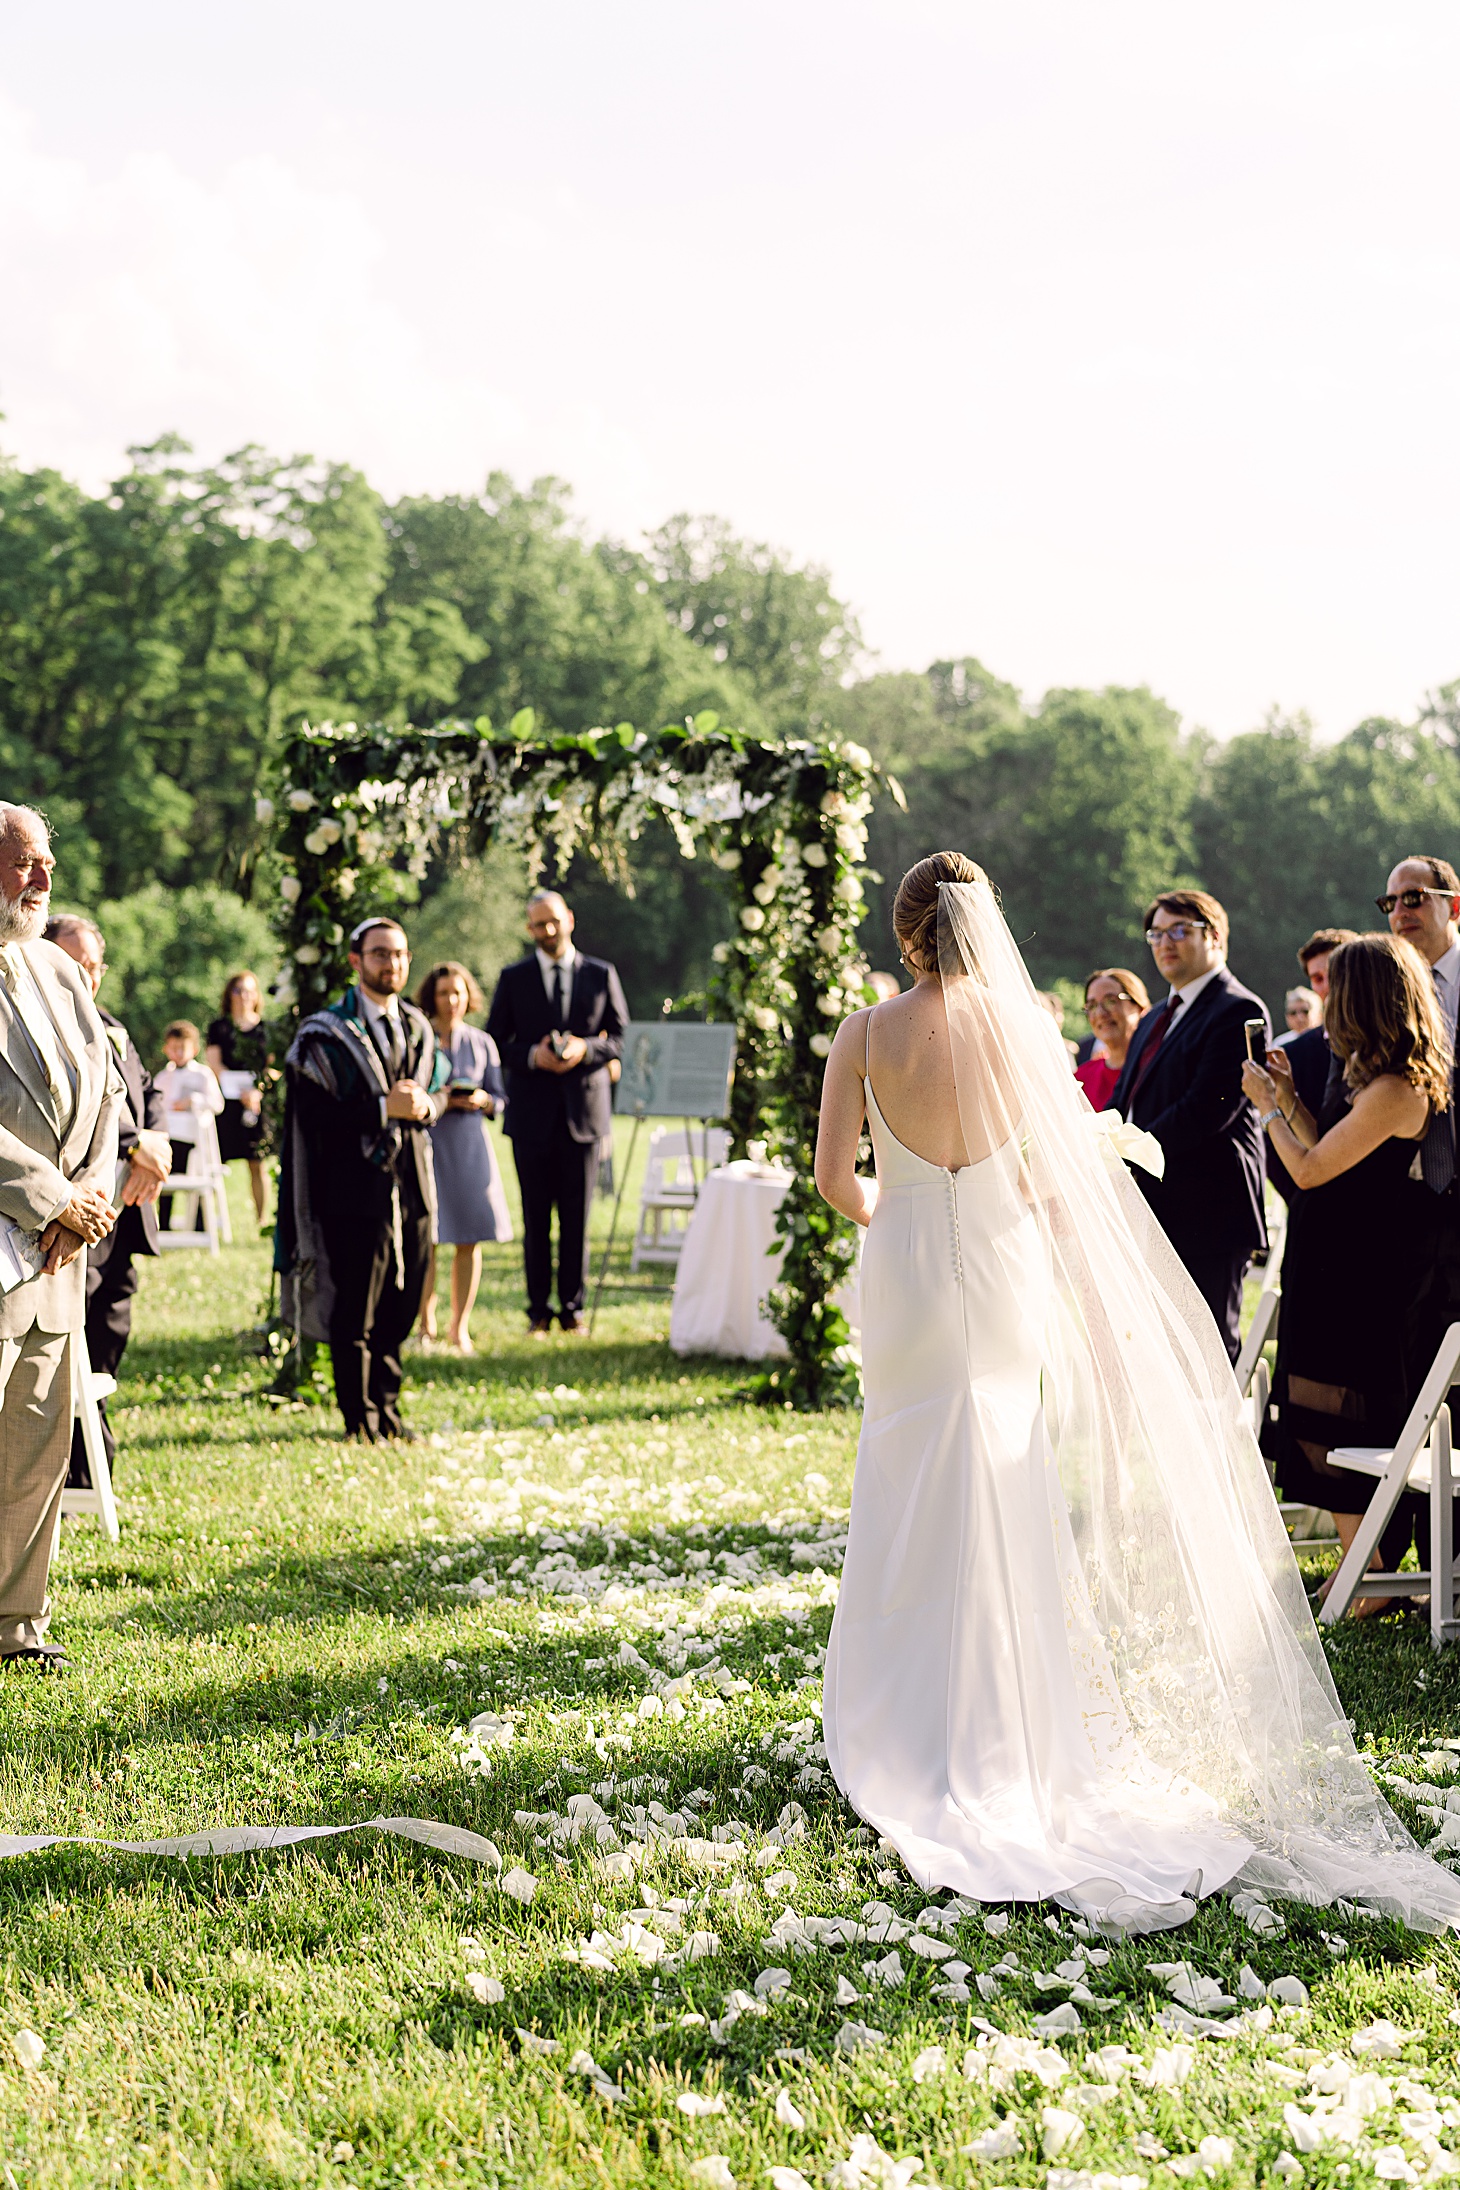 Ceremony  | Modern Music-Inspired Jewish Wedding at Private Estate by Sarah Bradshaw